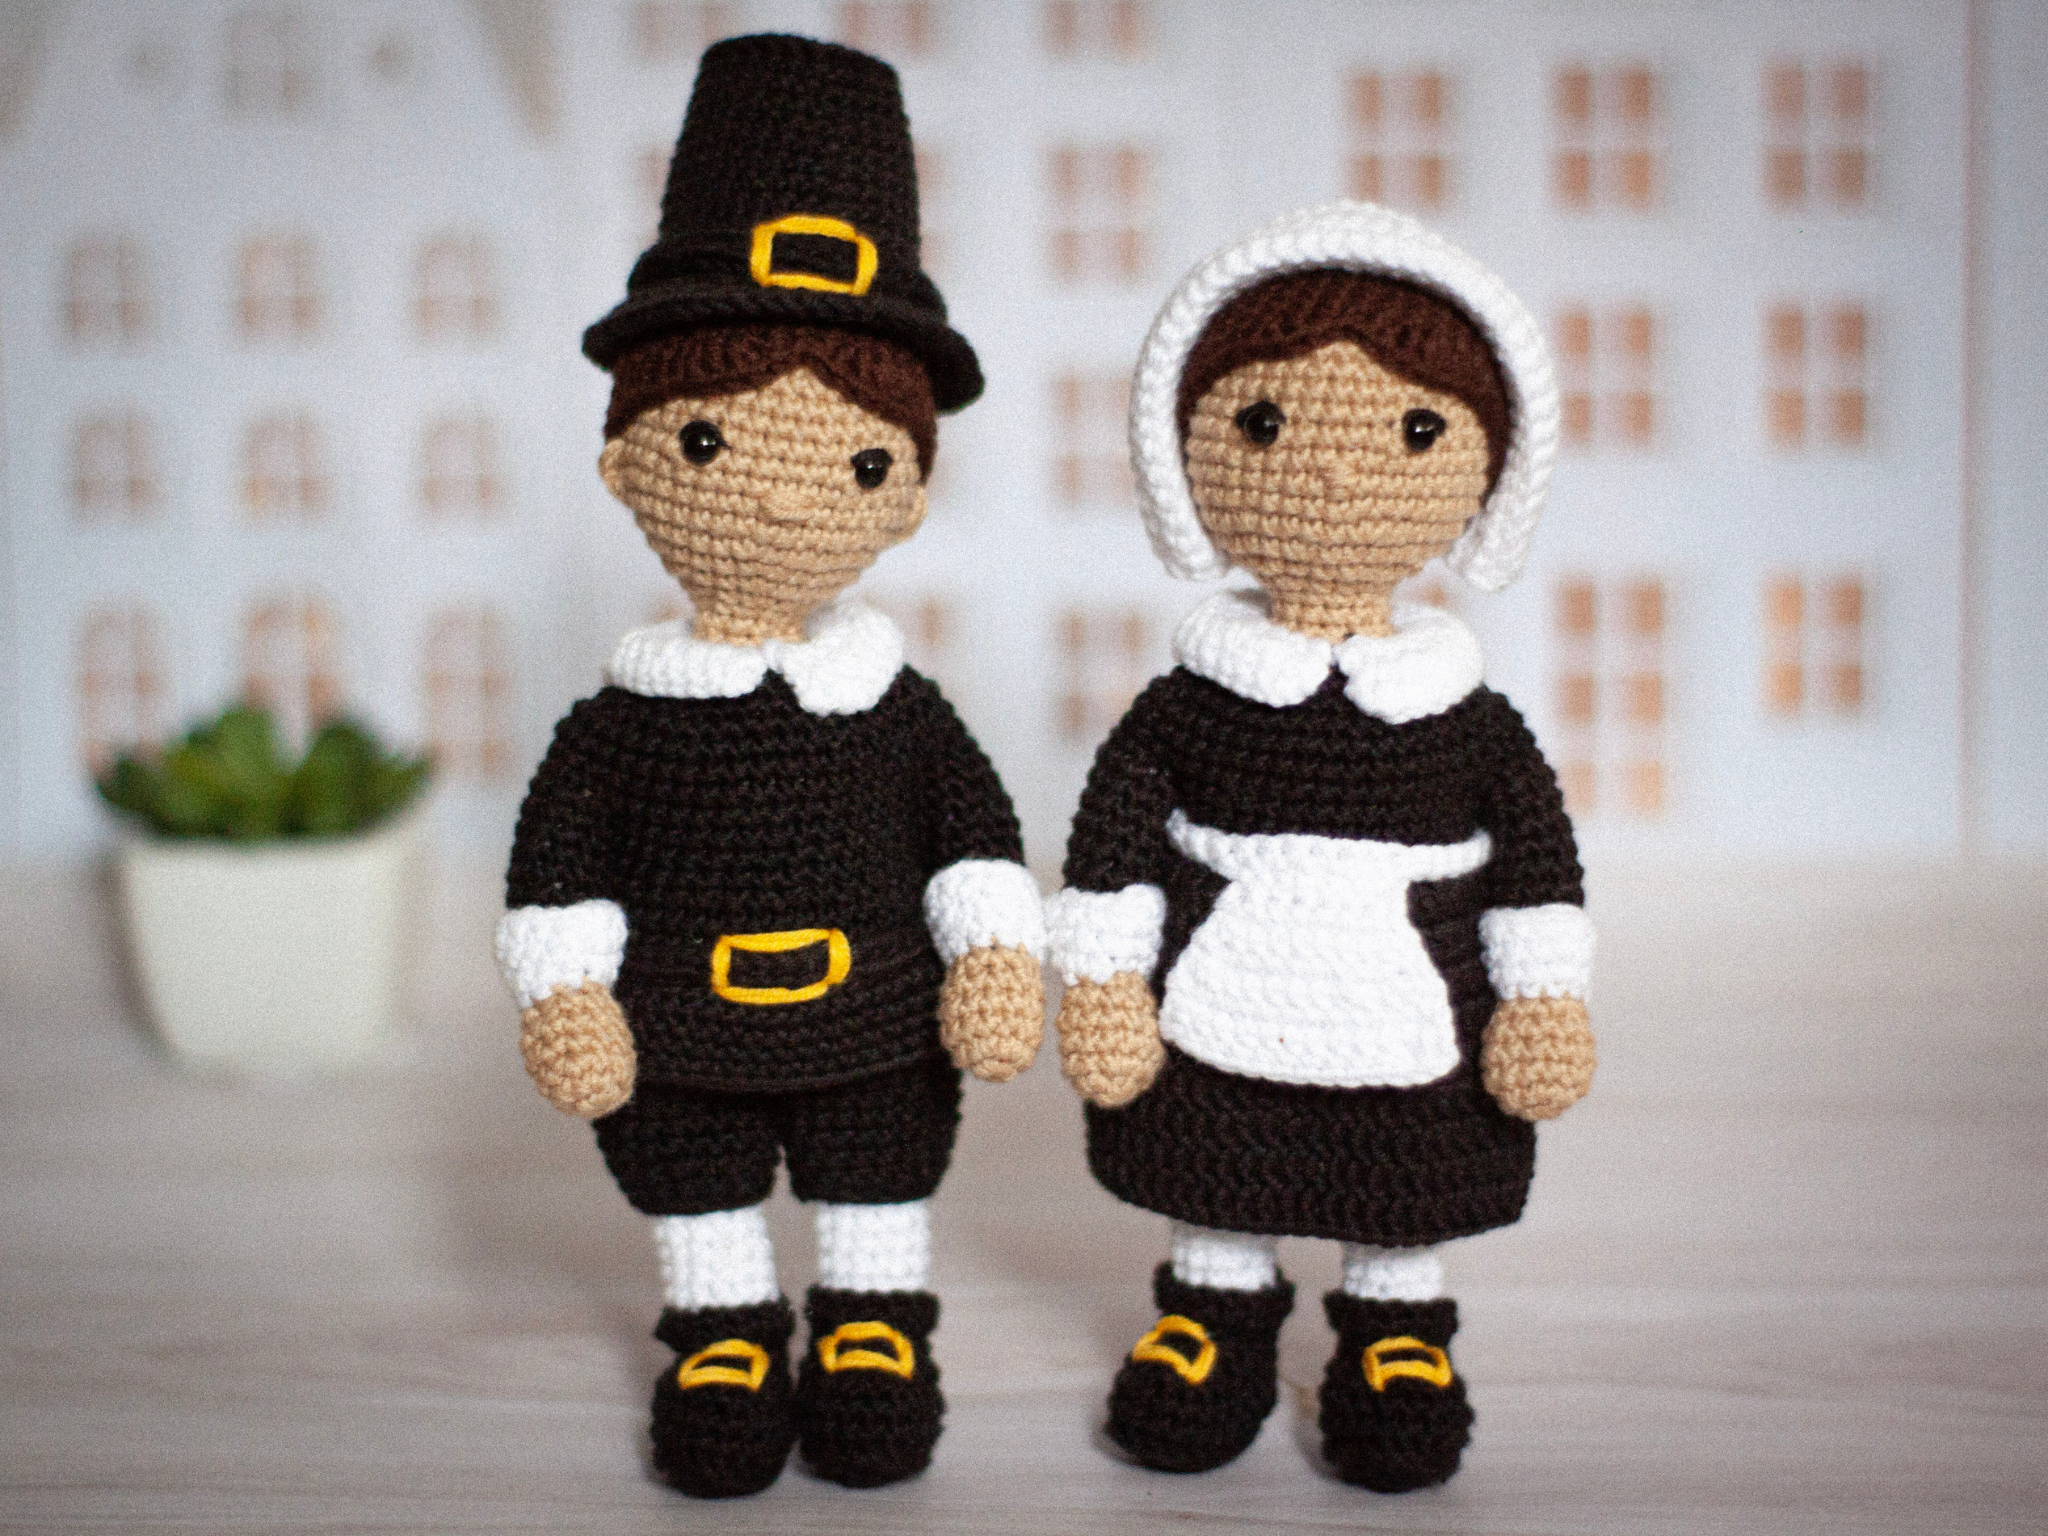 Crochet patterns amigurumi Mr. and Mrs. Pilgrims Thanksgiving Day PDF / Instant Download tutorial